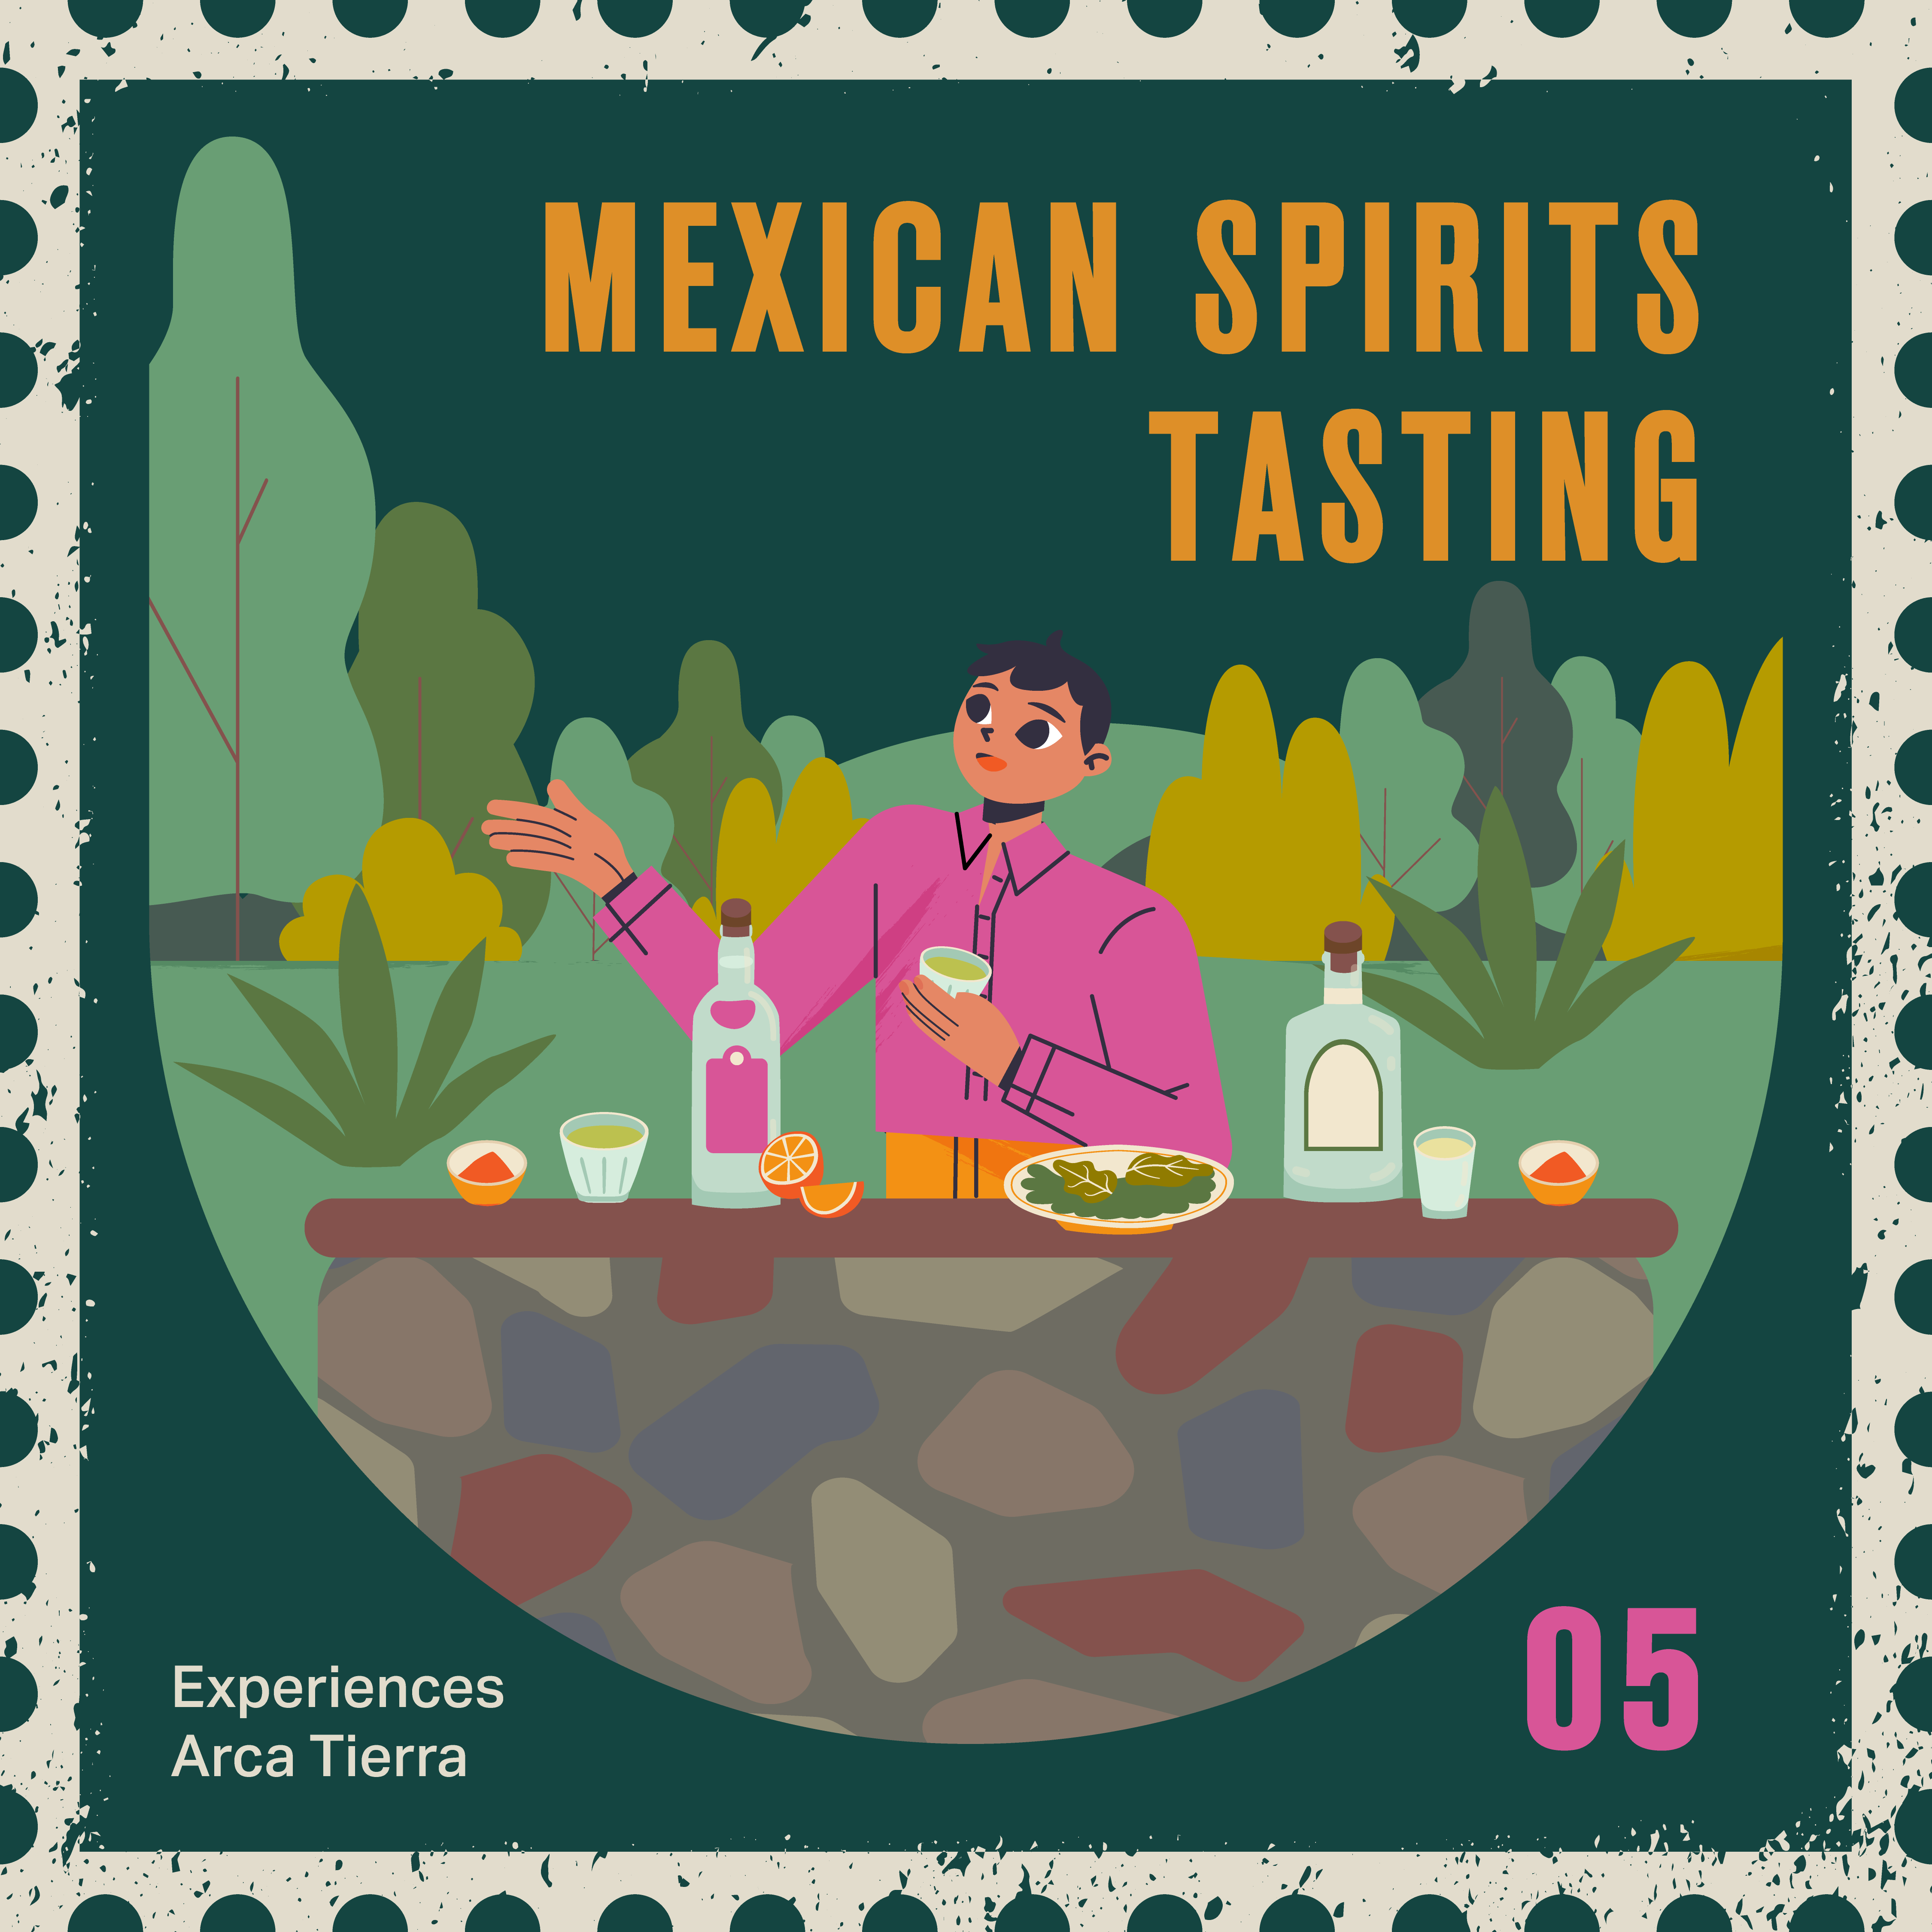 Mexican Spirits tasting